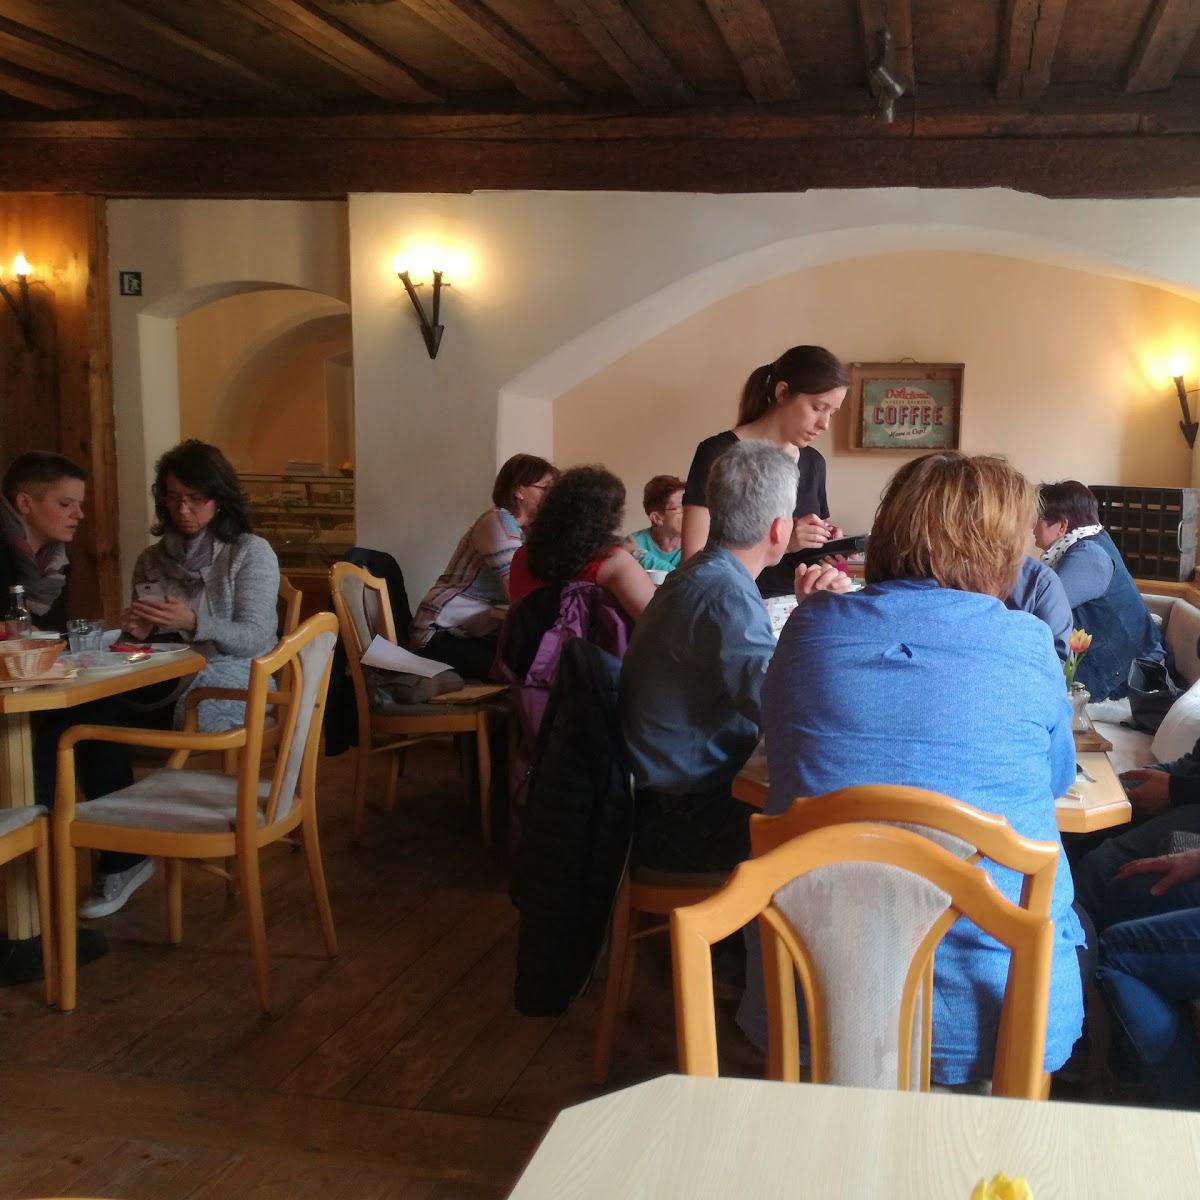 Restaurant "Café Ludwig-Adl" in Nabburg